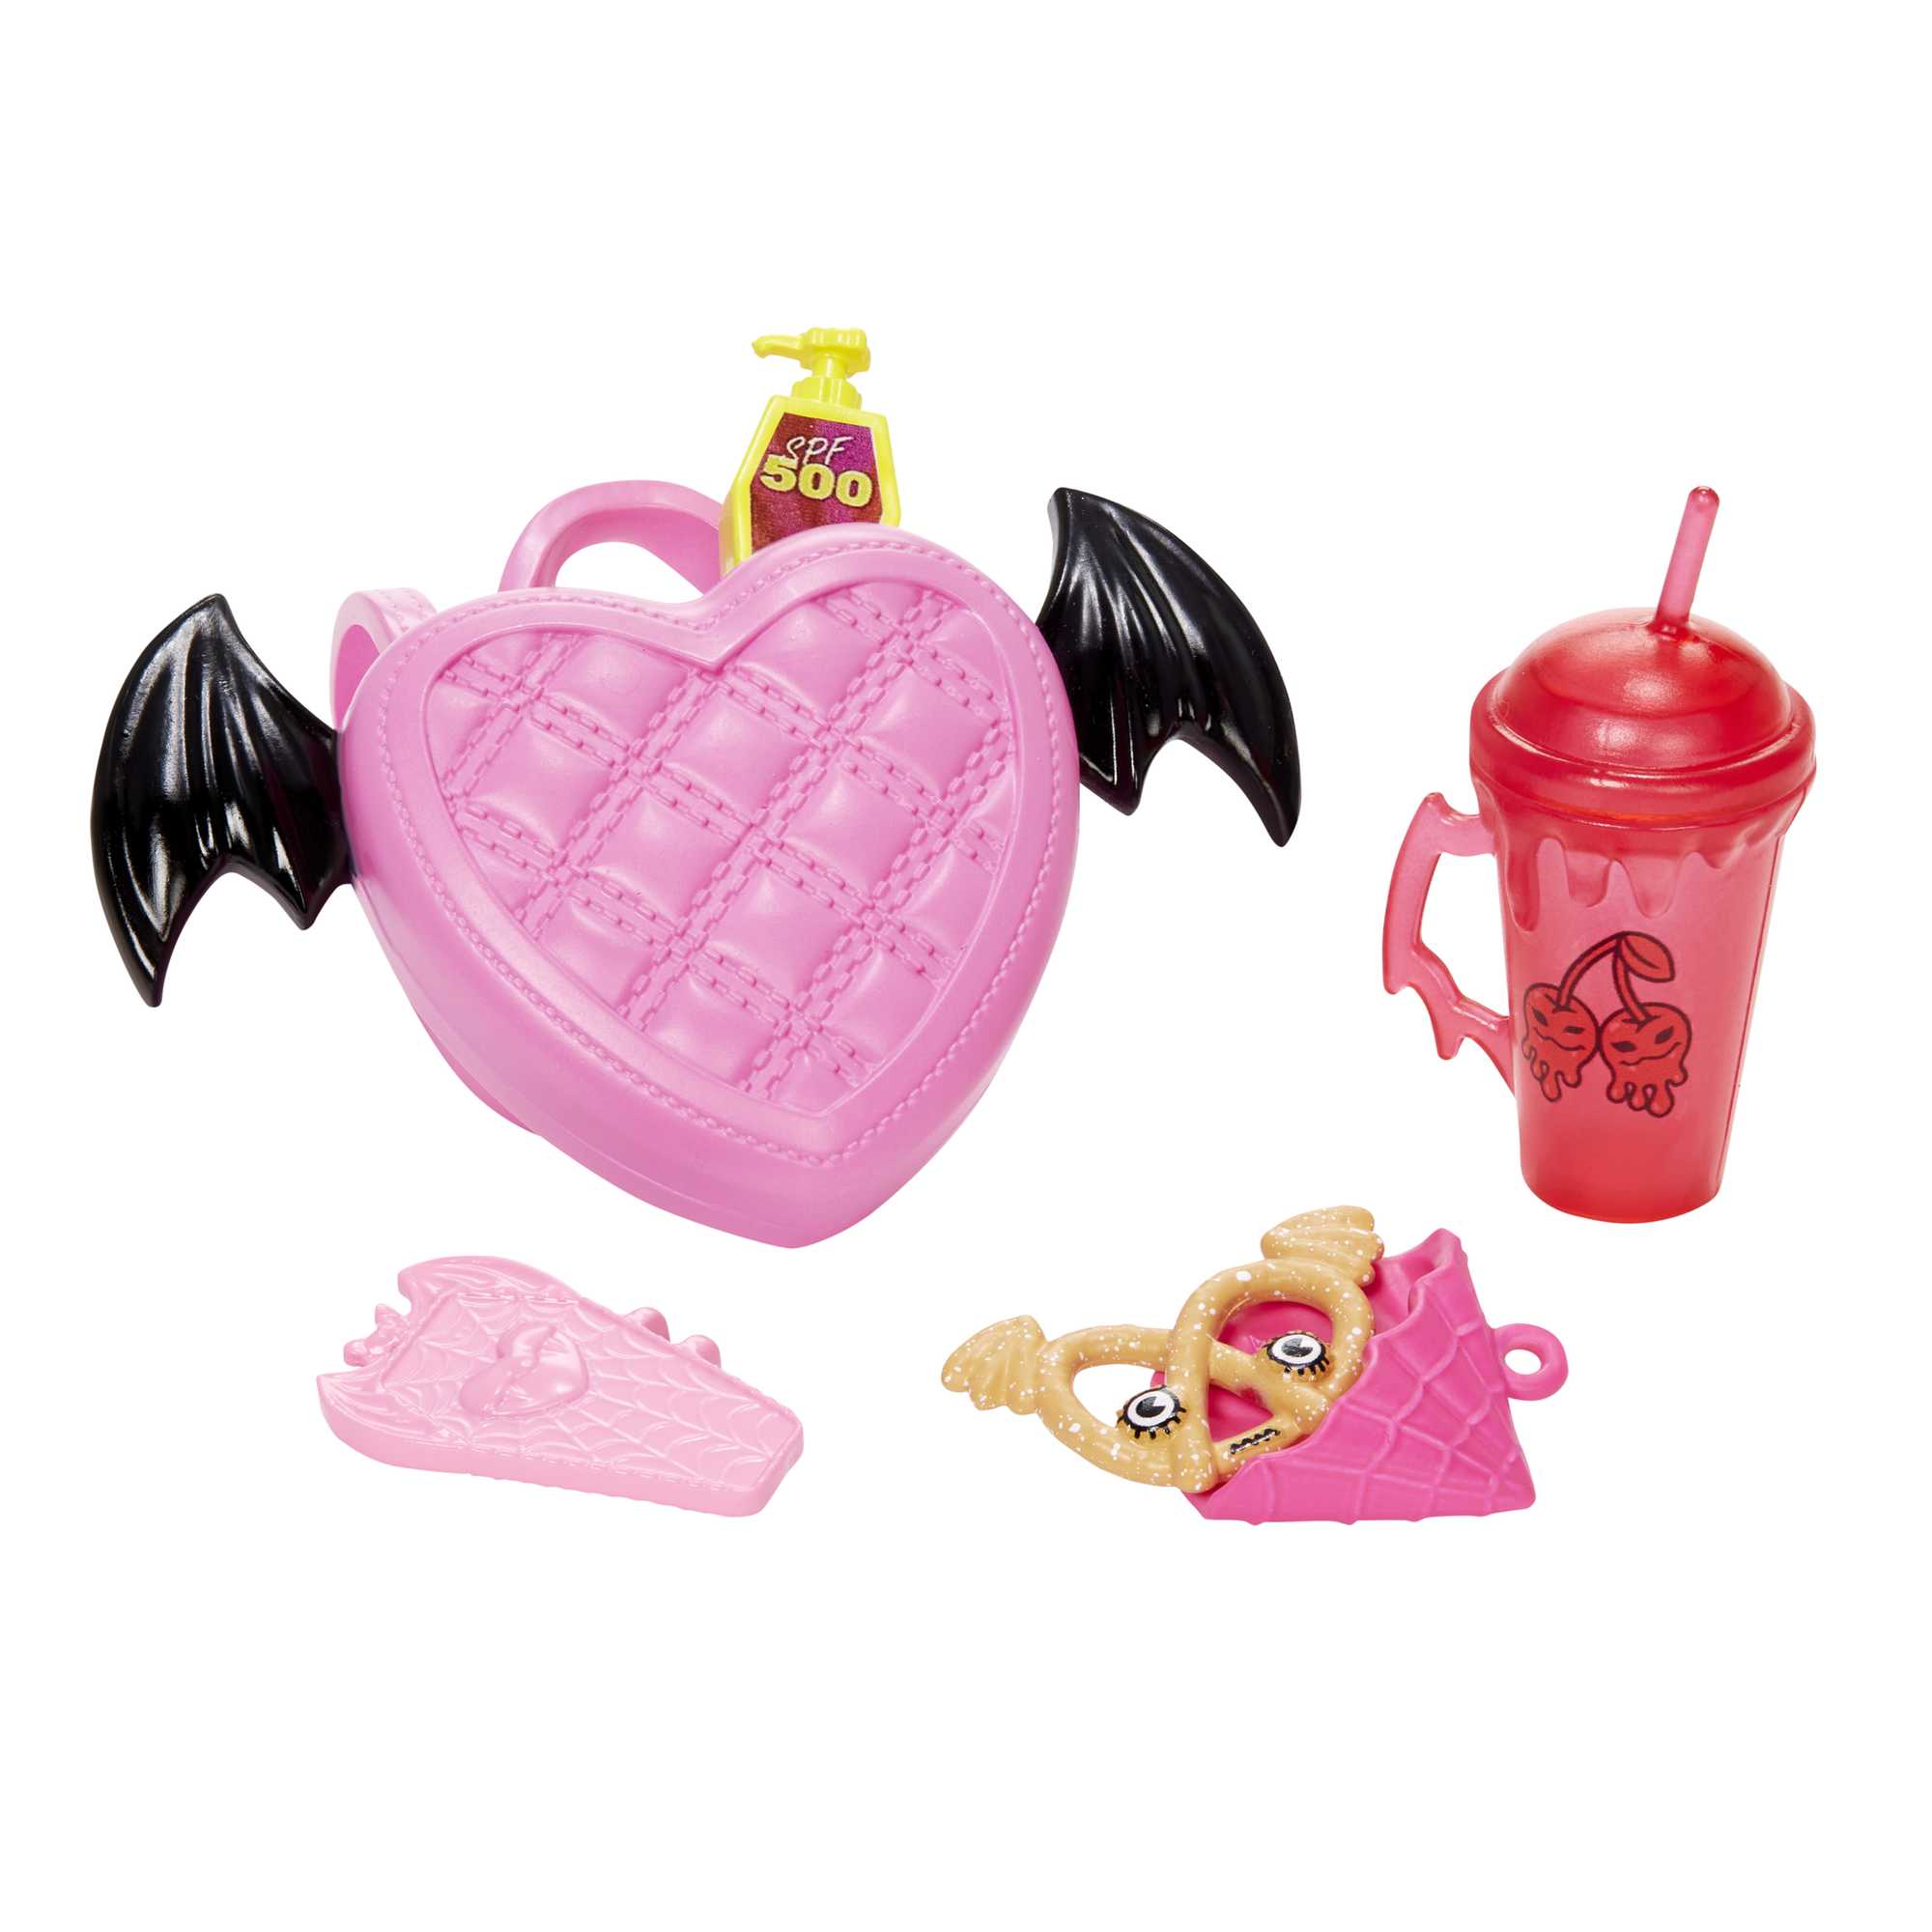 Boneca Mattel Monster High Draculaura Moda HHK51